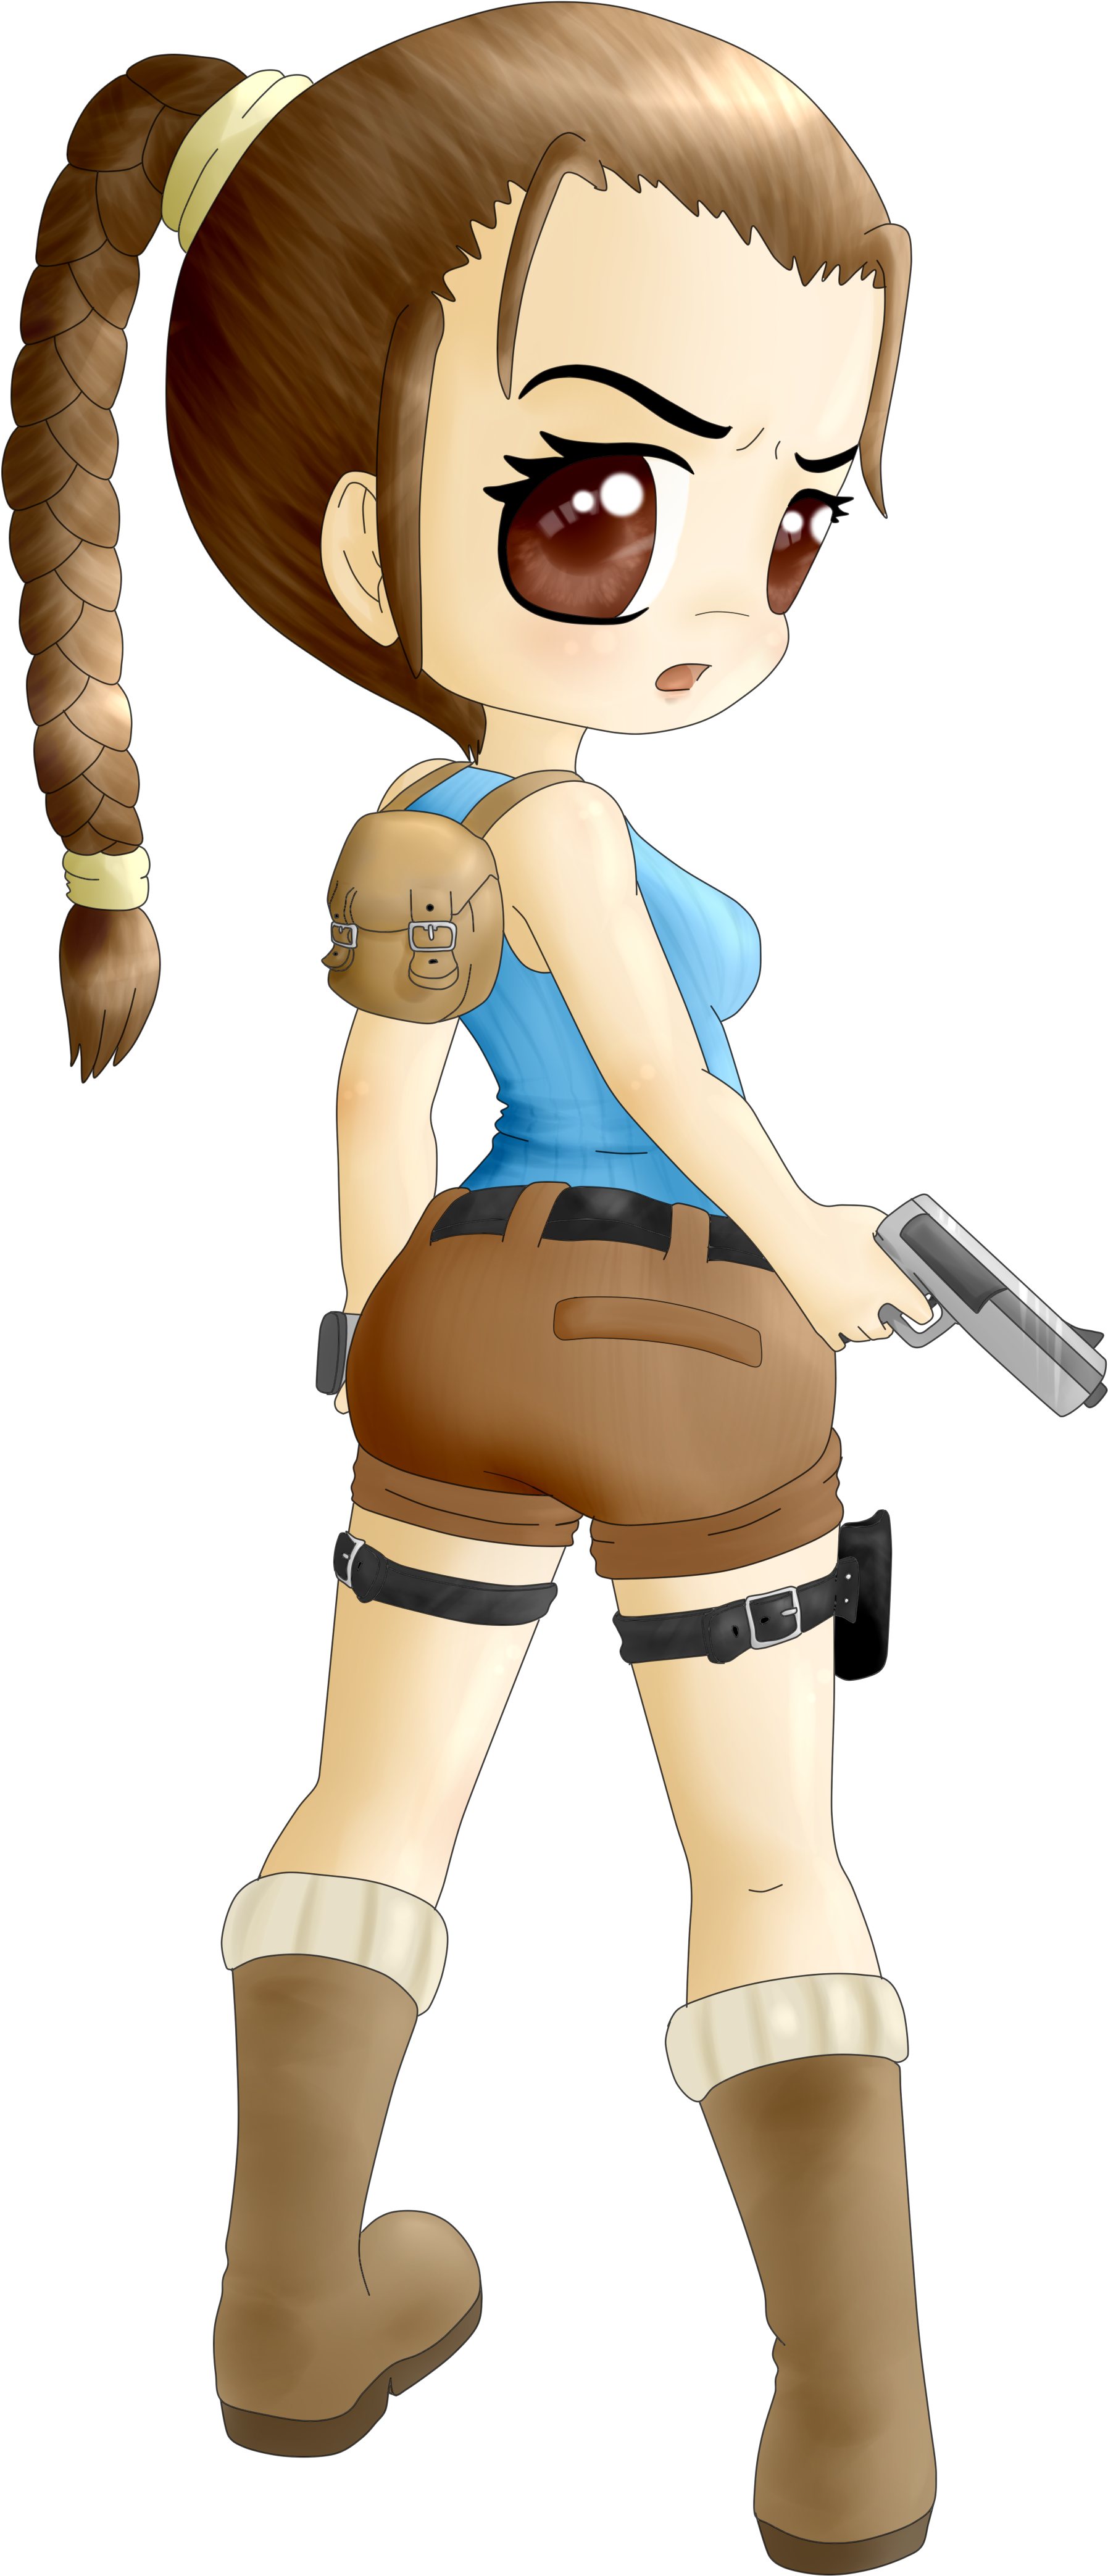 Chibi Classical Lara Croft - Cute Lara Croft (3310x4659)